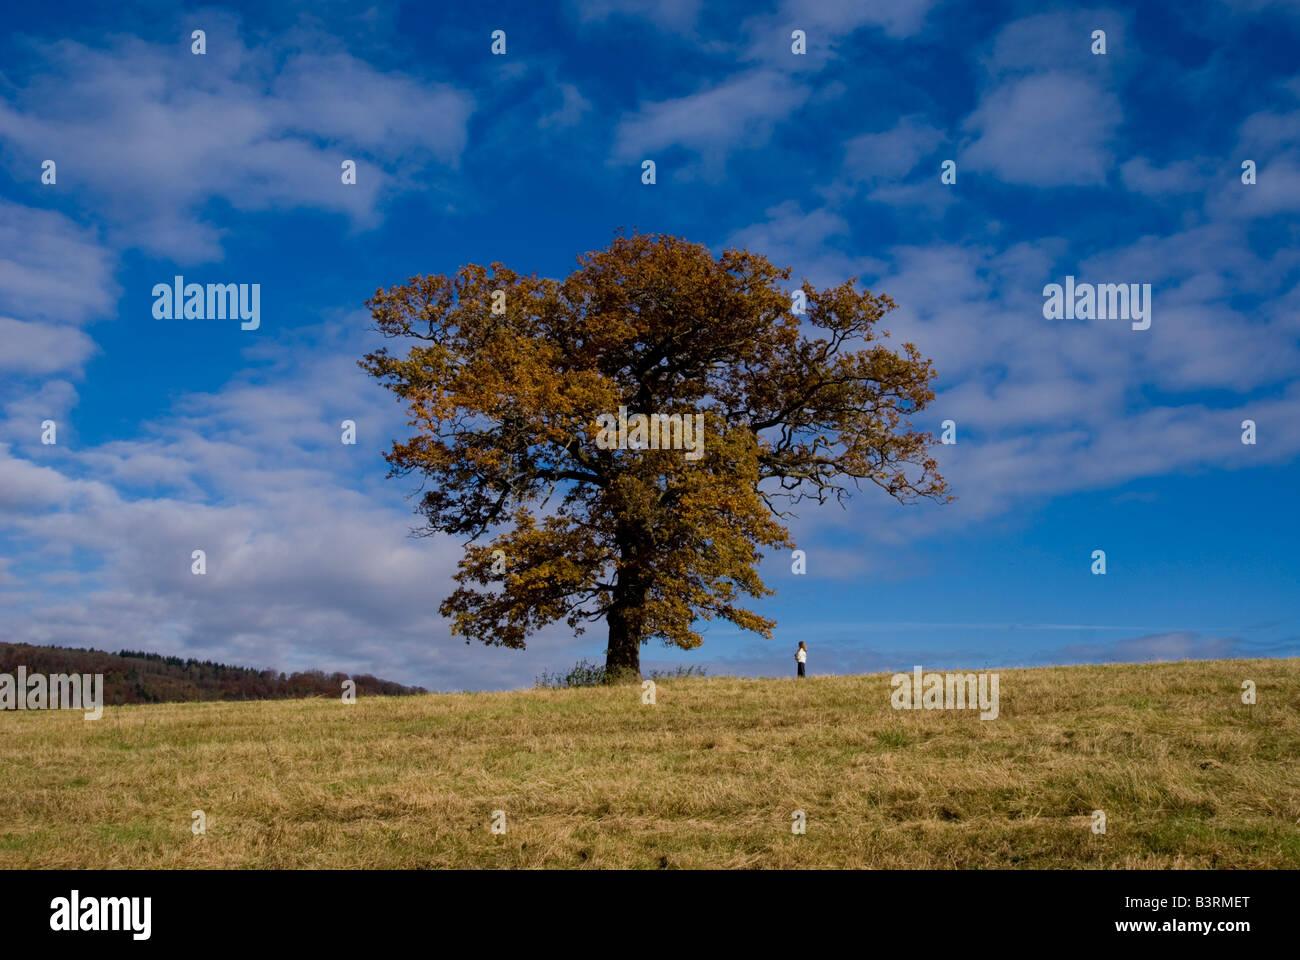 europe uk england surrey oak tree autumn Stock Photo